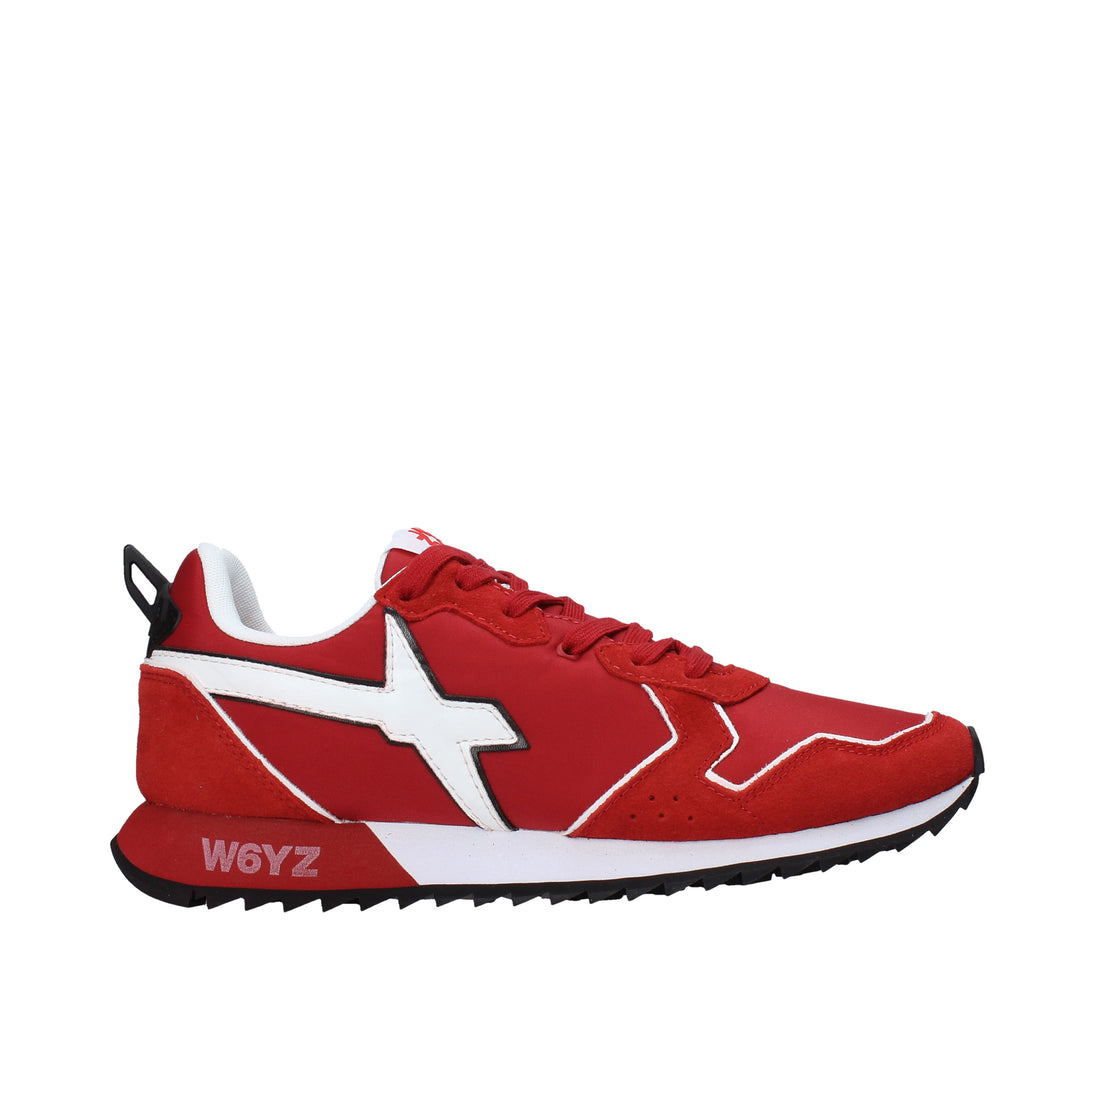 Sneakers Rosso W6yz